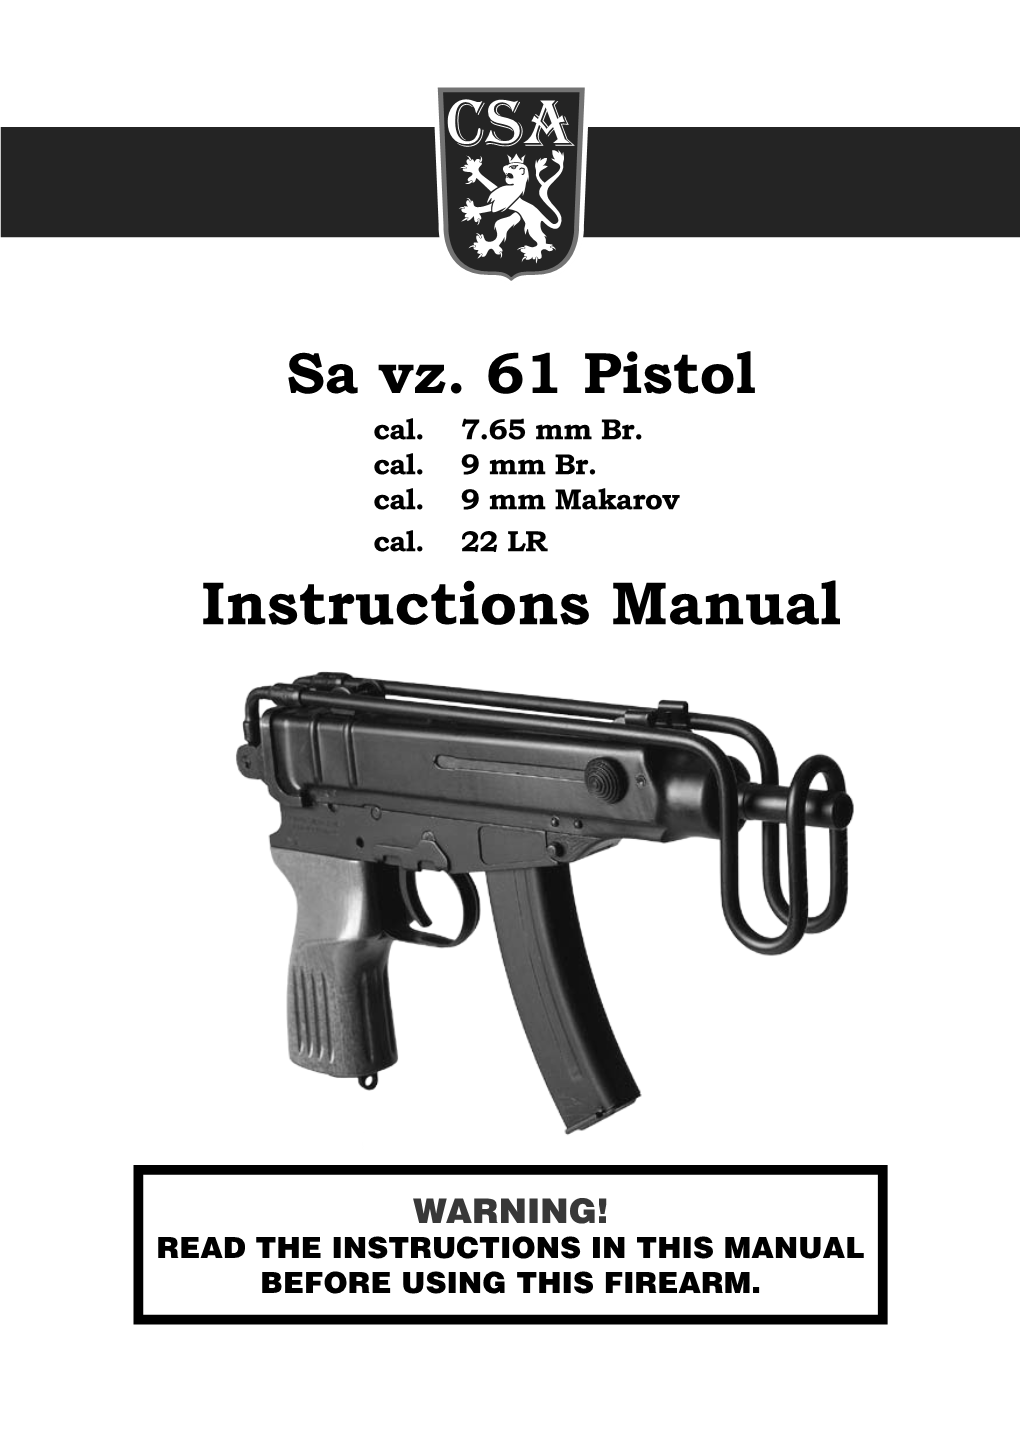 SA VZ. 61 Pistol INSTRUCTIONS MANUAL